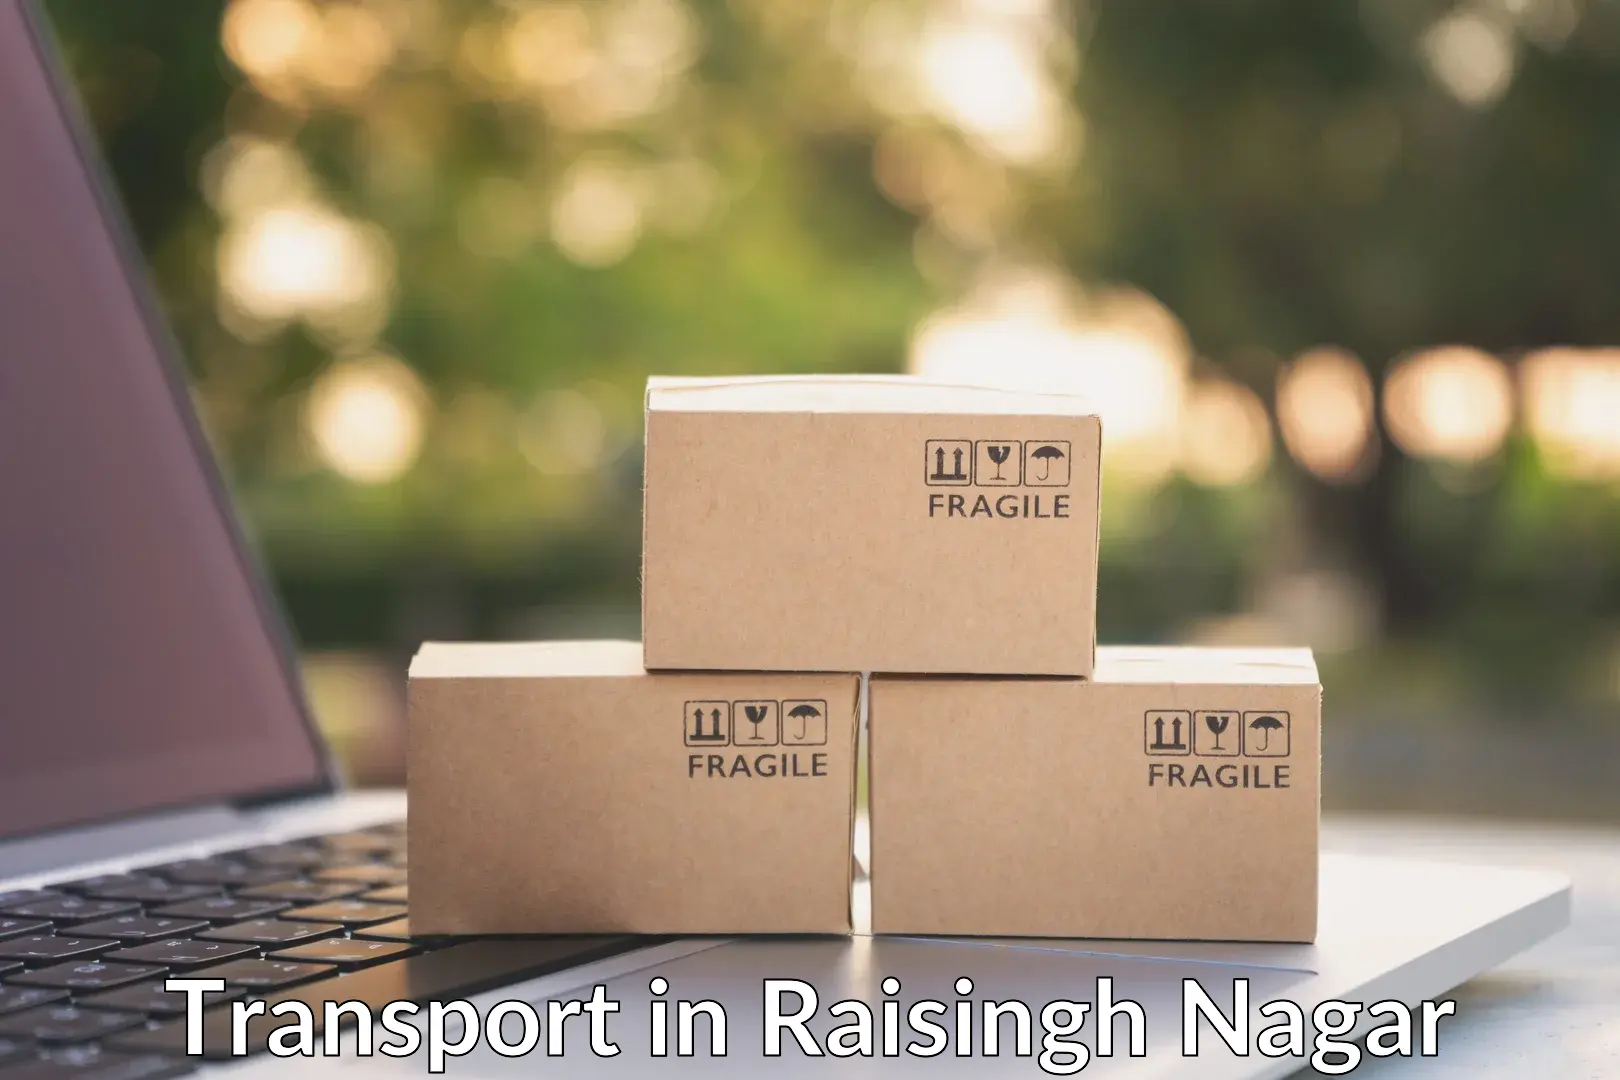 Daily parcel service transport in Raisingh Nagar